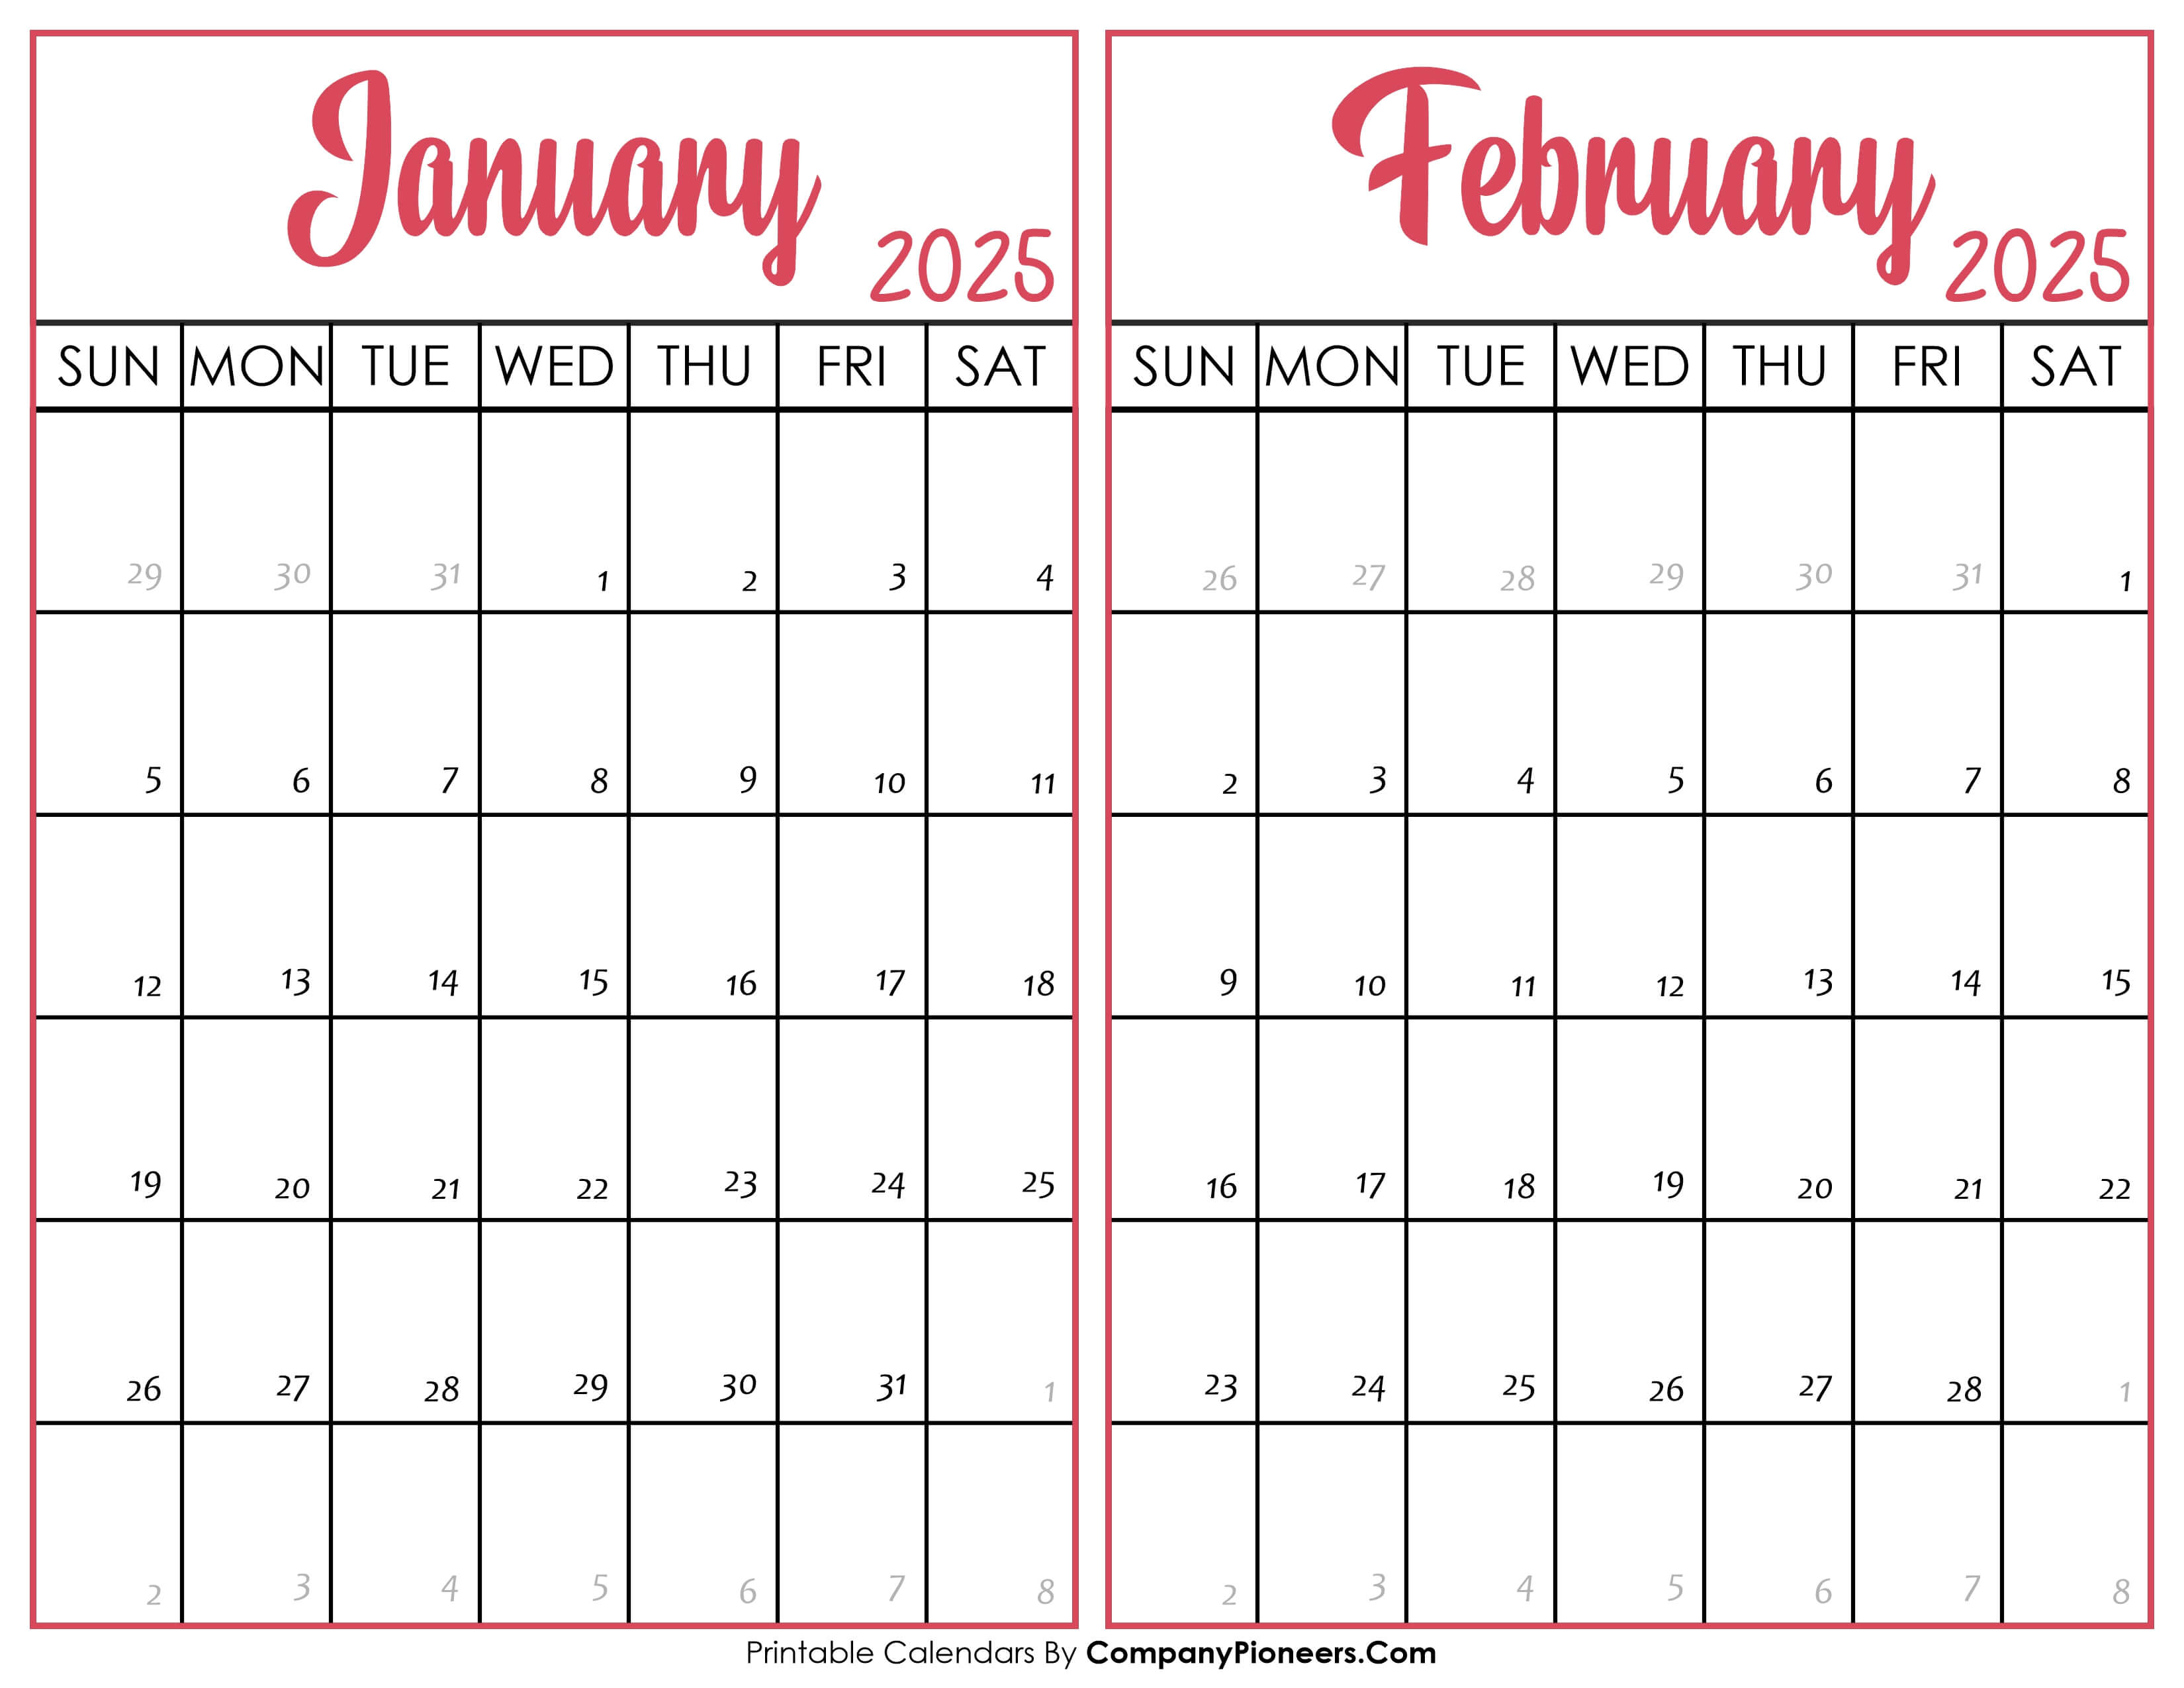 January and February Calendar 2025